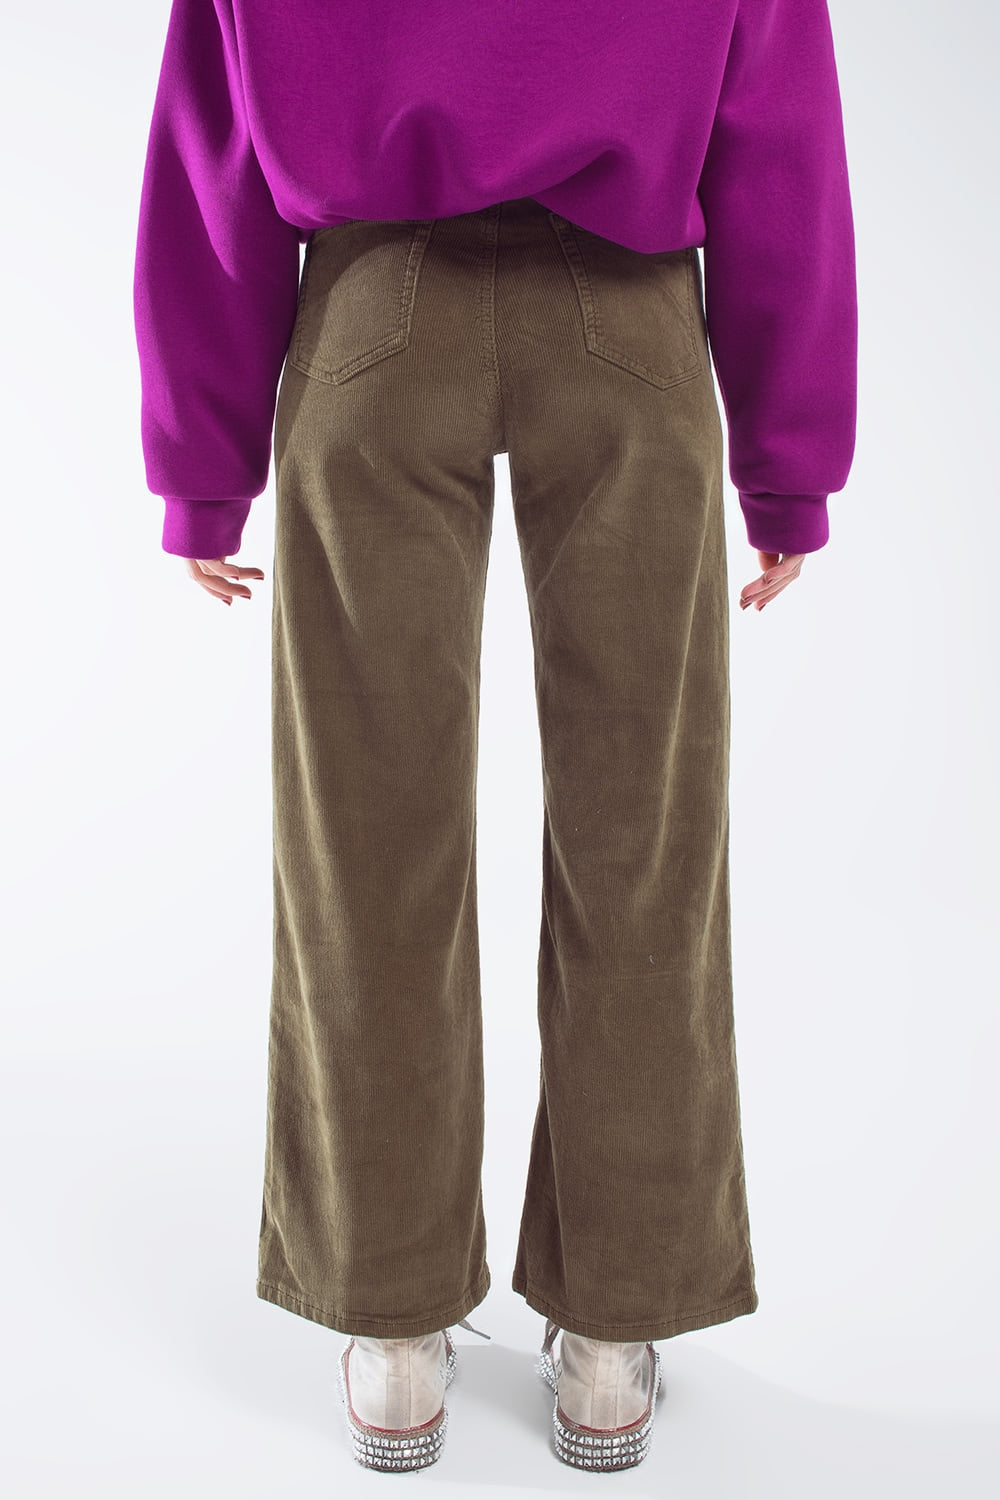 Cropped cord pants in khaki